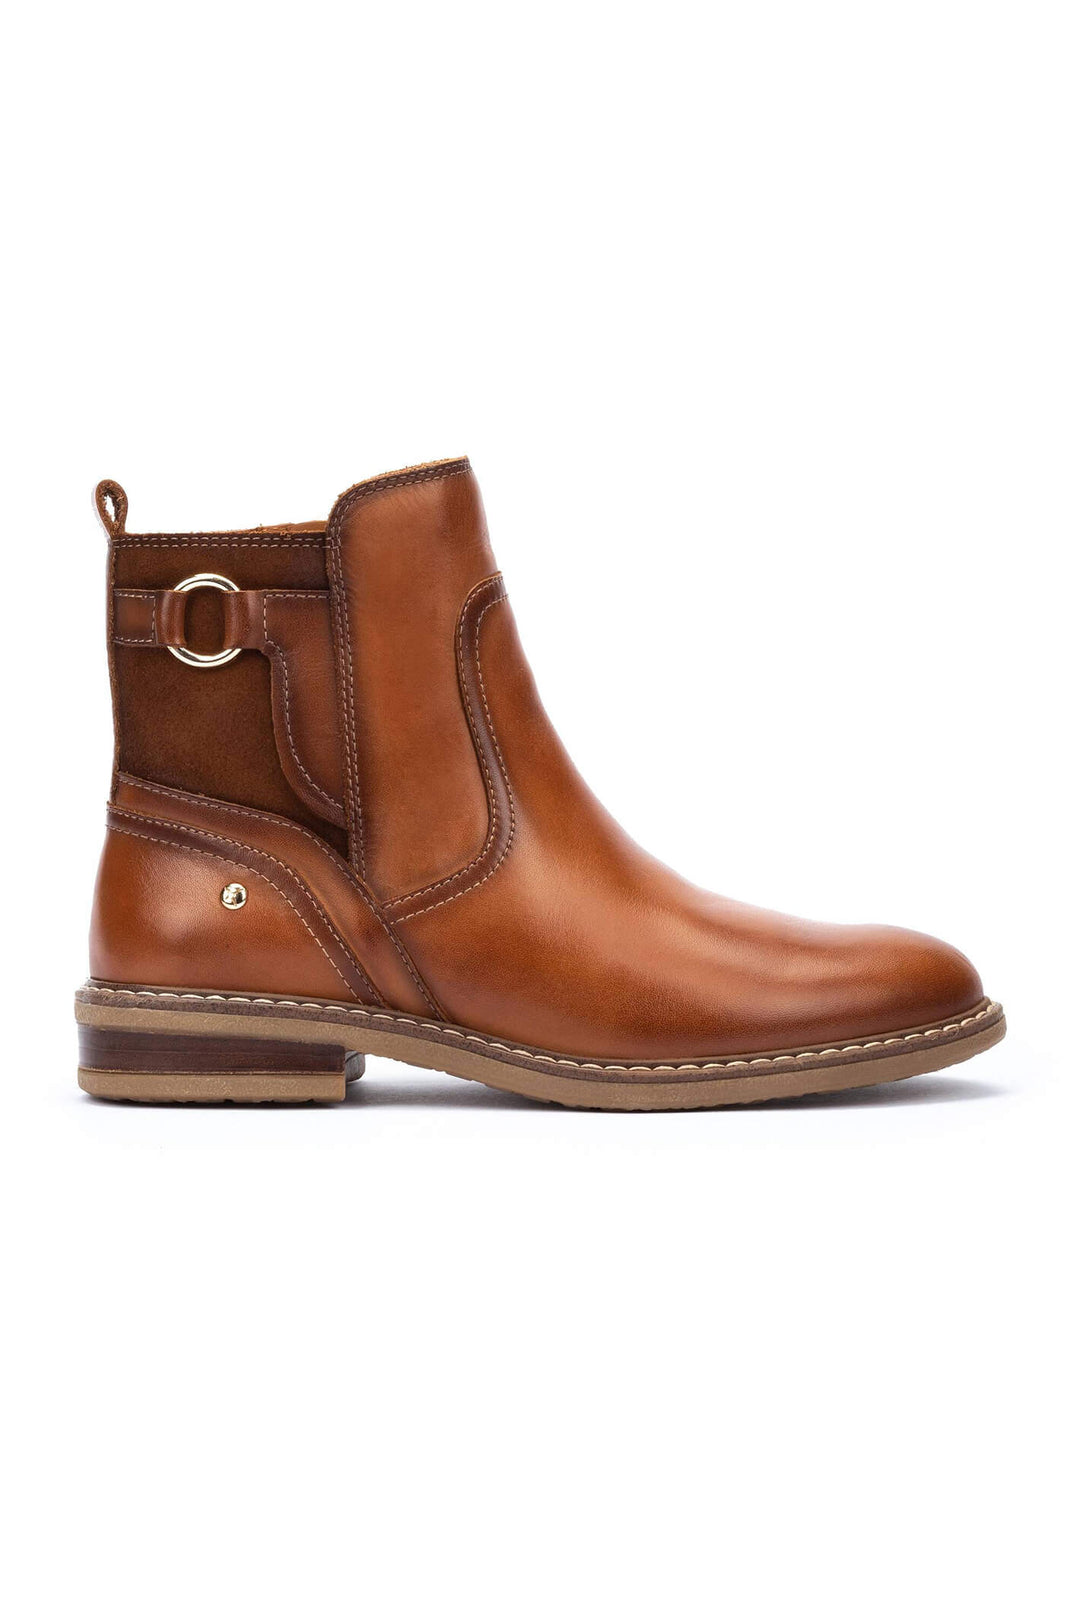 Pikolinos Aldaya W8J-8604C1 Brandy Brown High Ankle Women's Boots - Shirley Allum Boutique